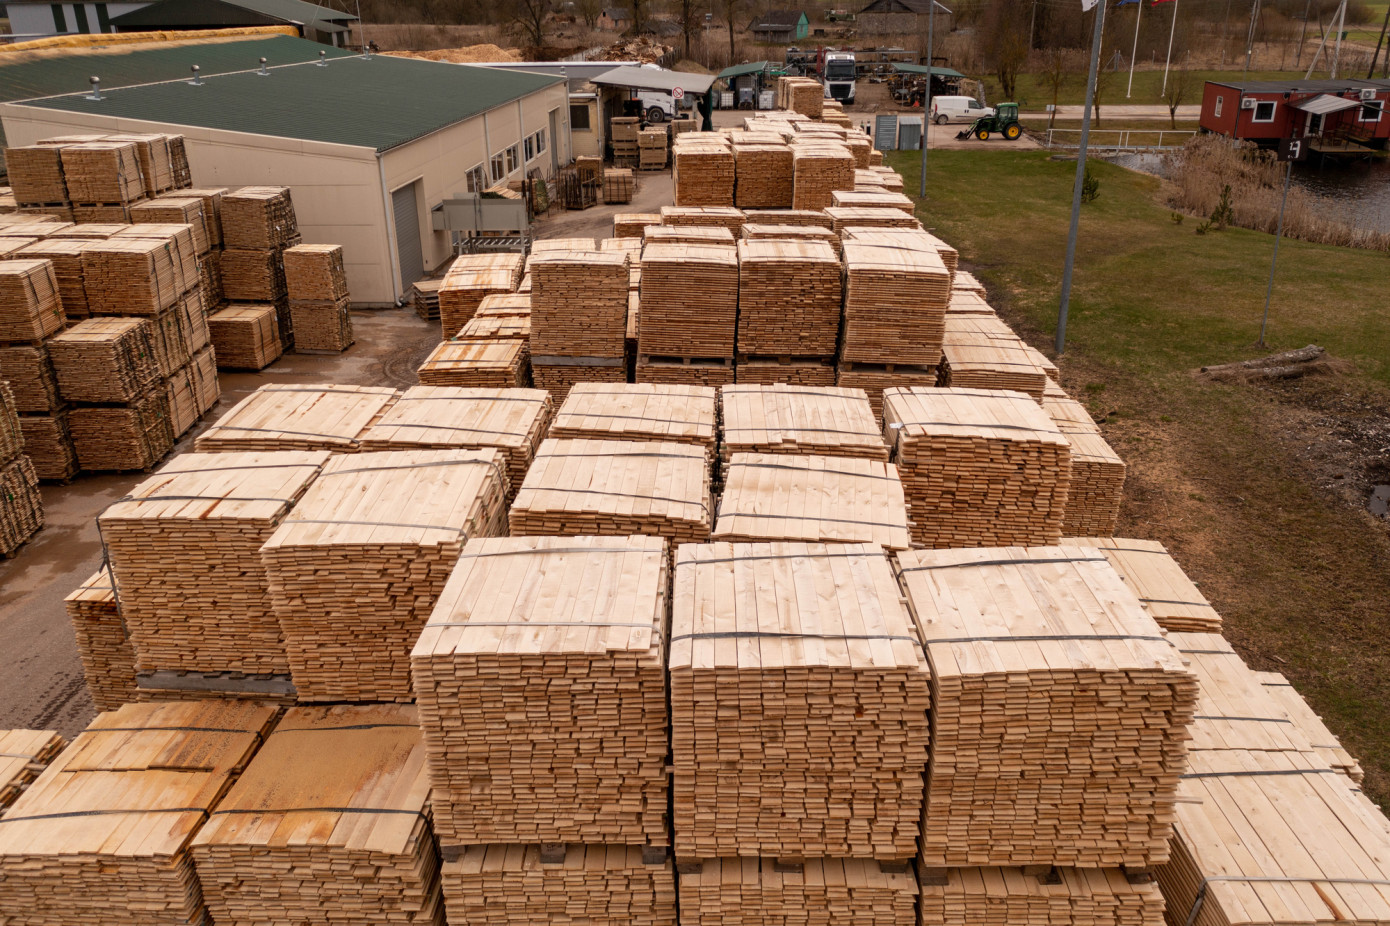 Canadian lumber production decreased by 22.6% Y-o-Y in December